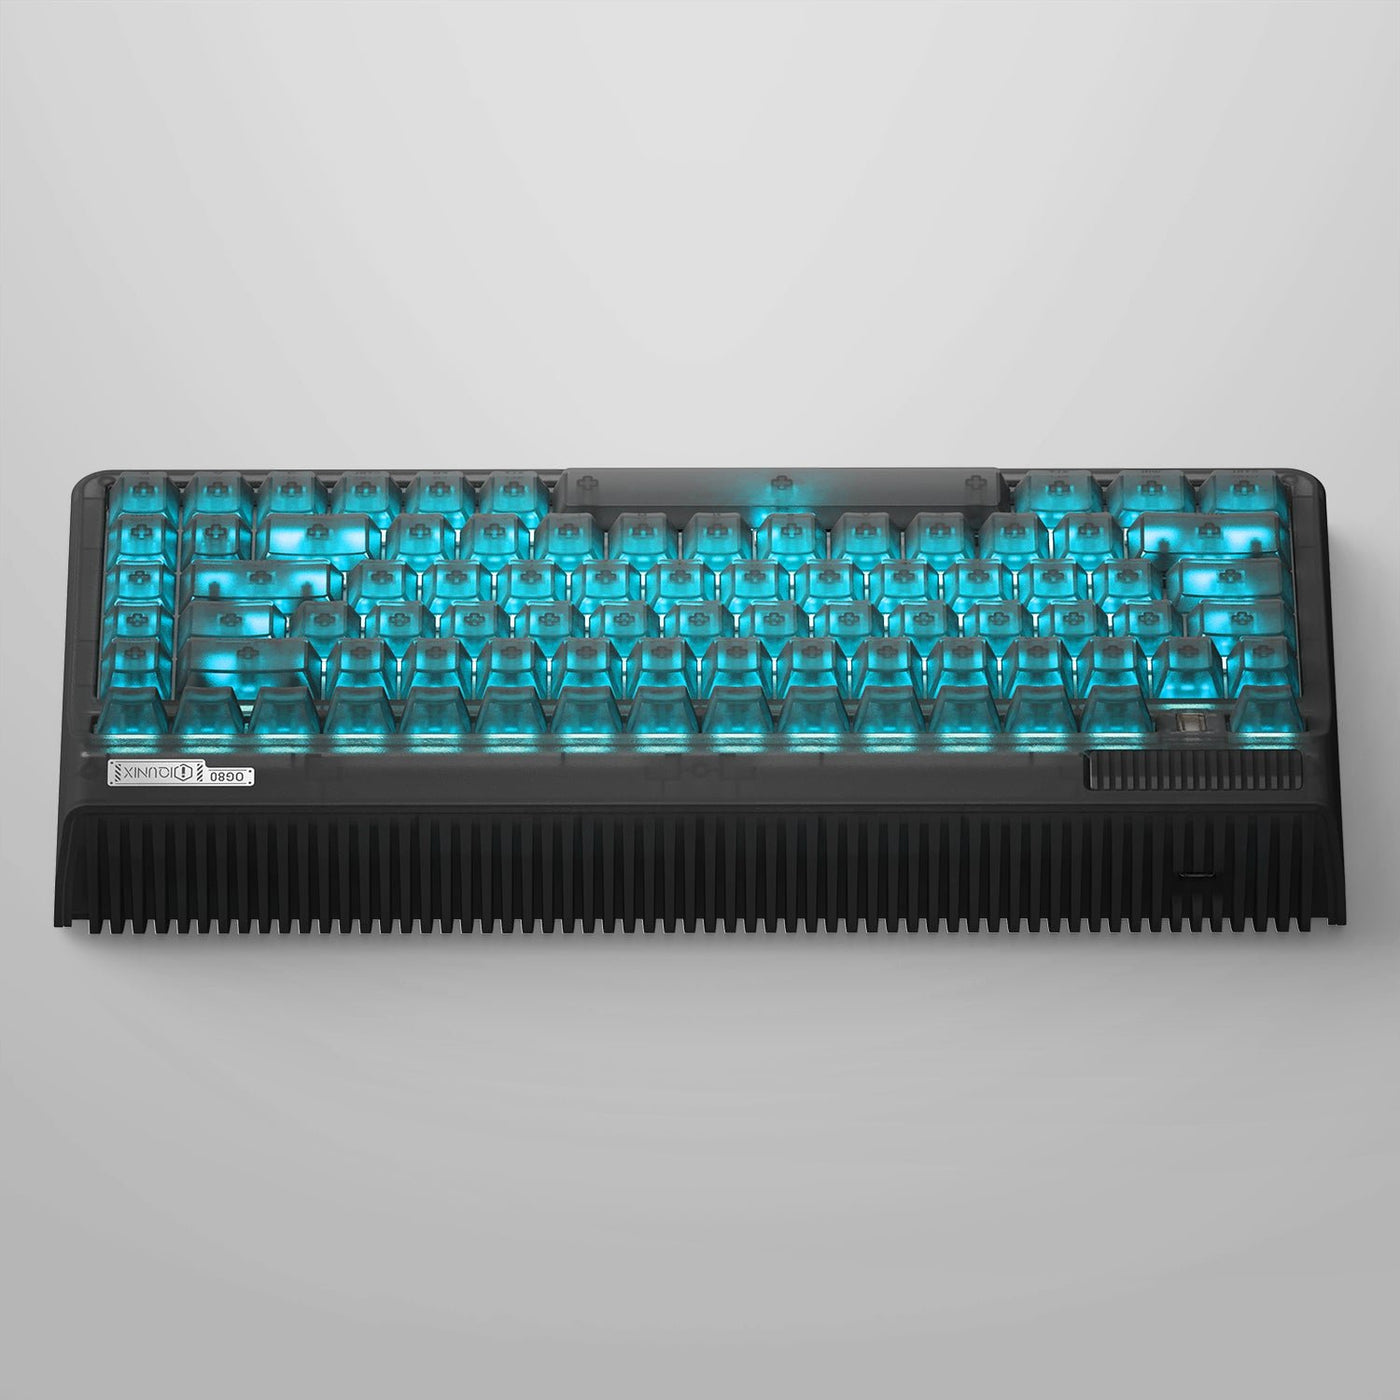 IQUNIX OG80 Dark Side Hot Swappable Wireless Mechanical Keyboard